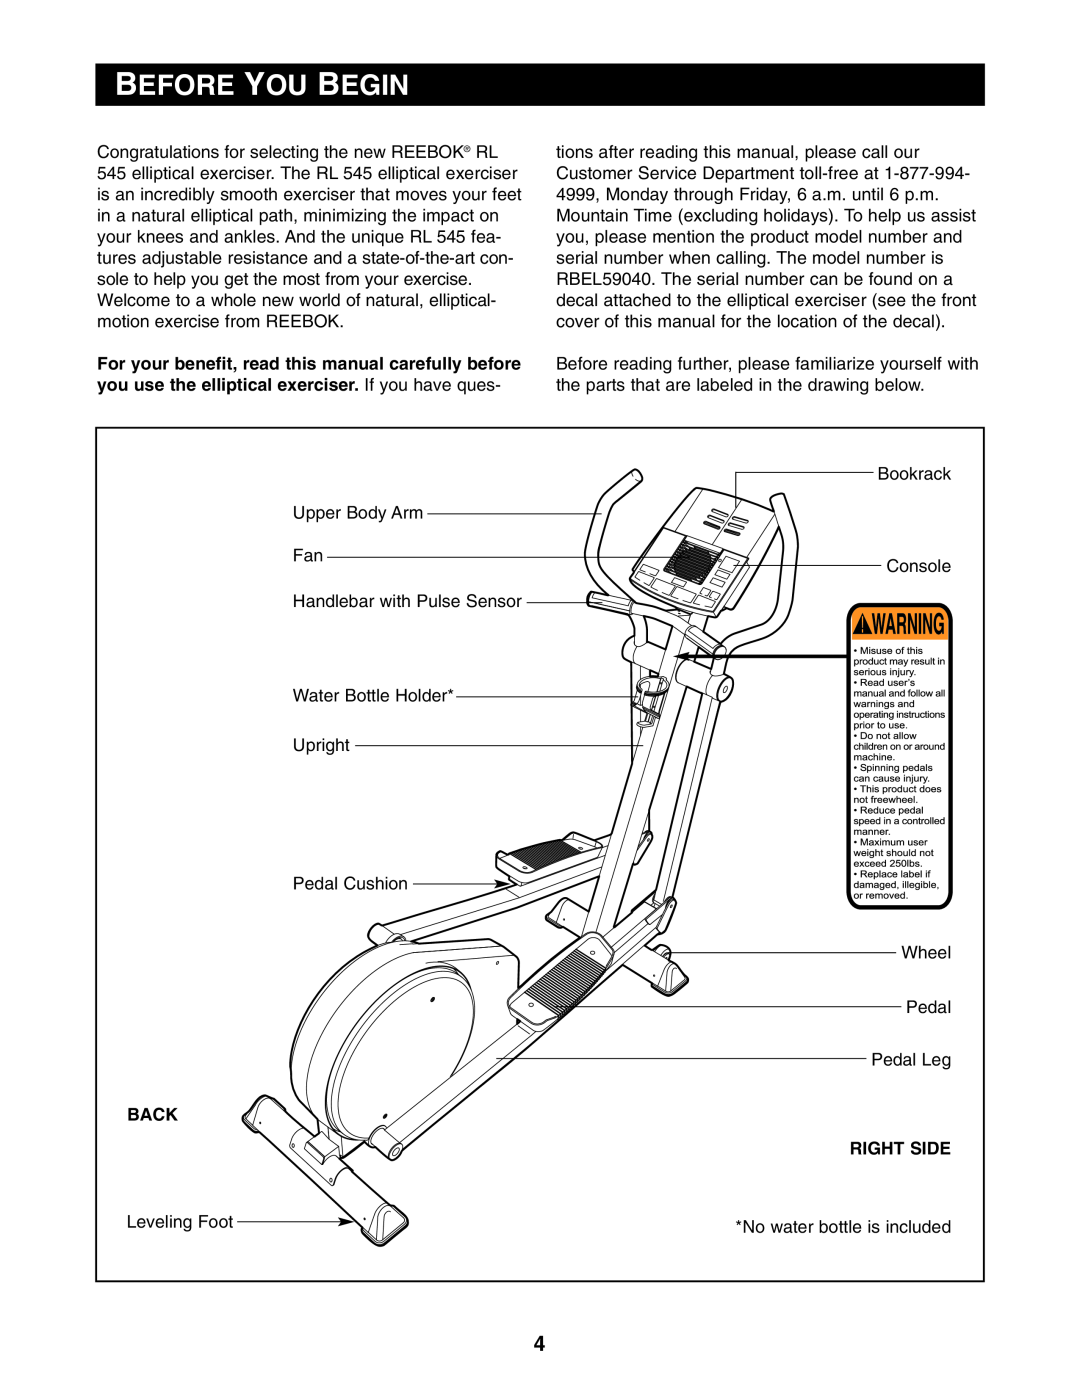 Reebok Fitness RBEL59040 manual Before You Begin, Back, Right Side 